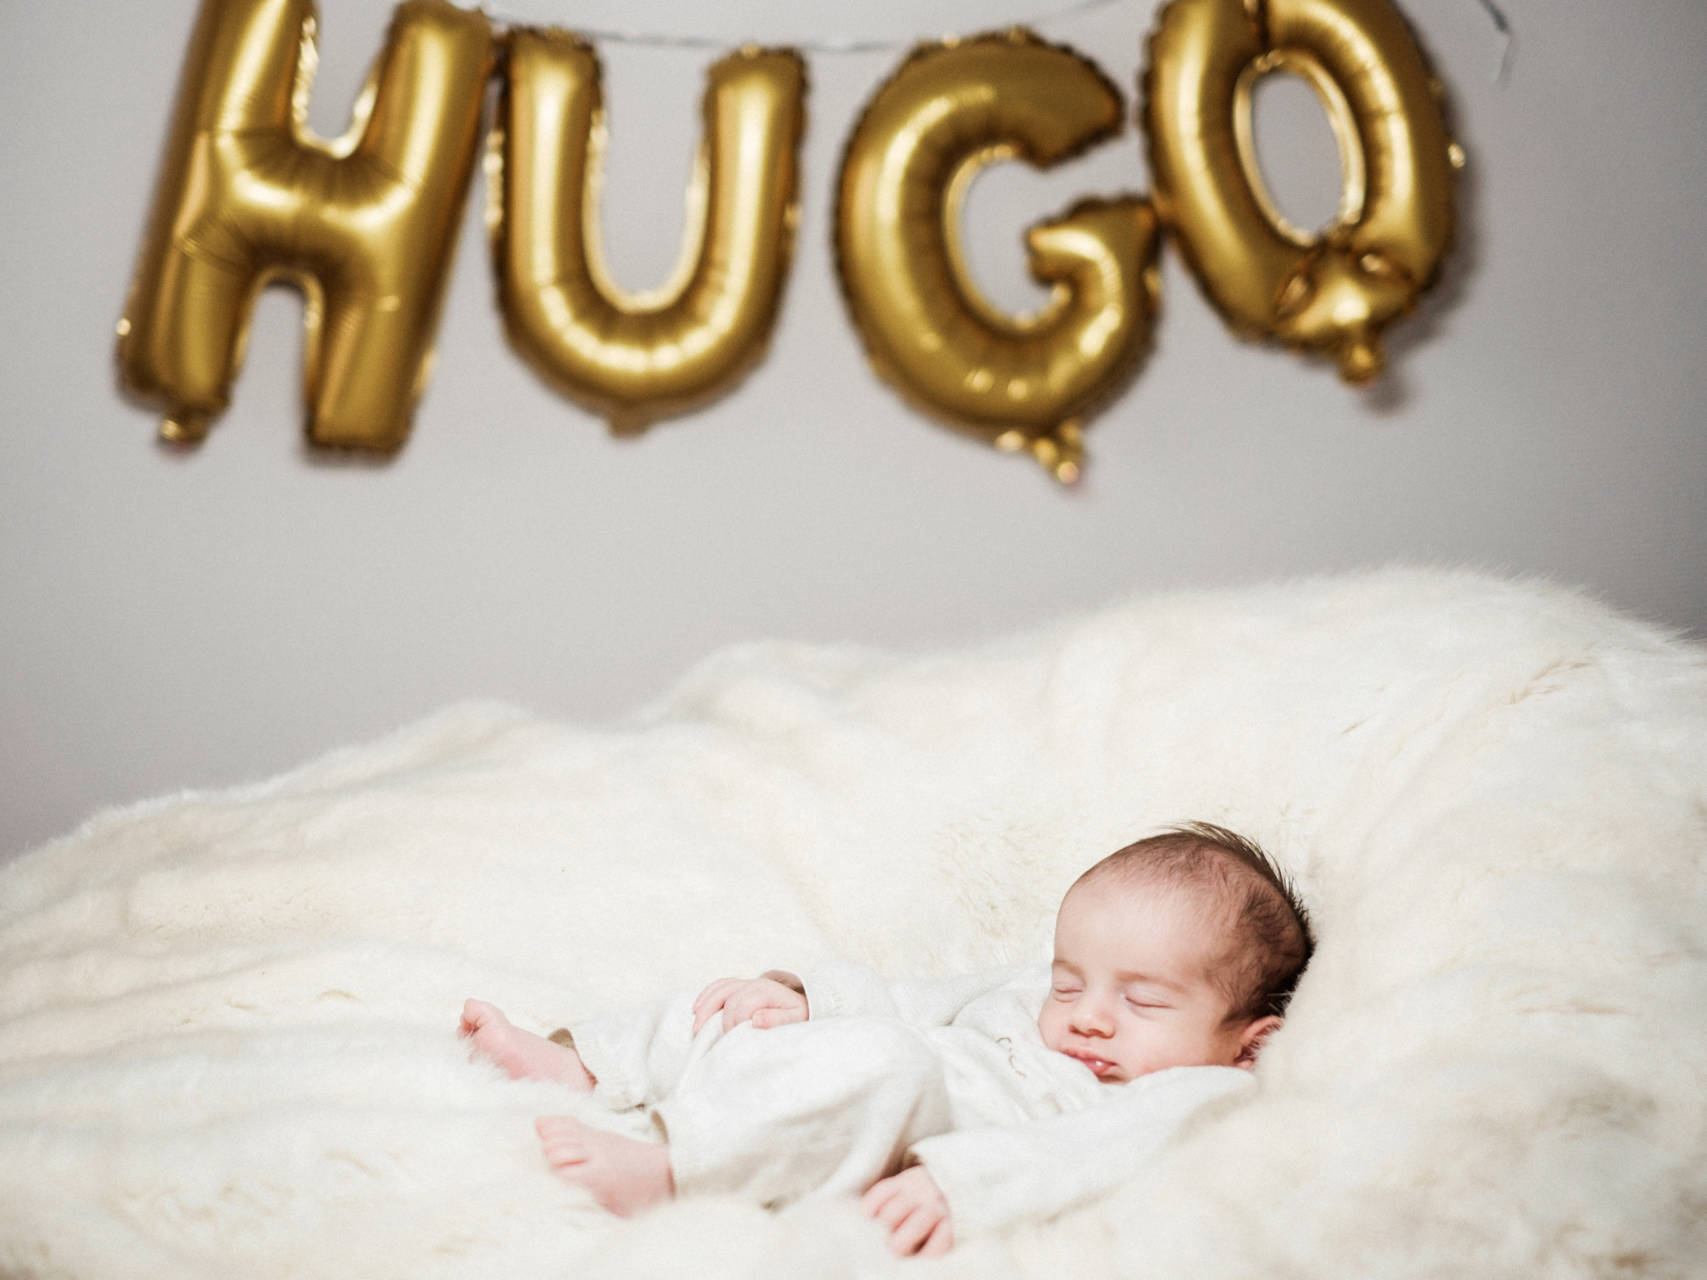 Newborn session with Hugo